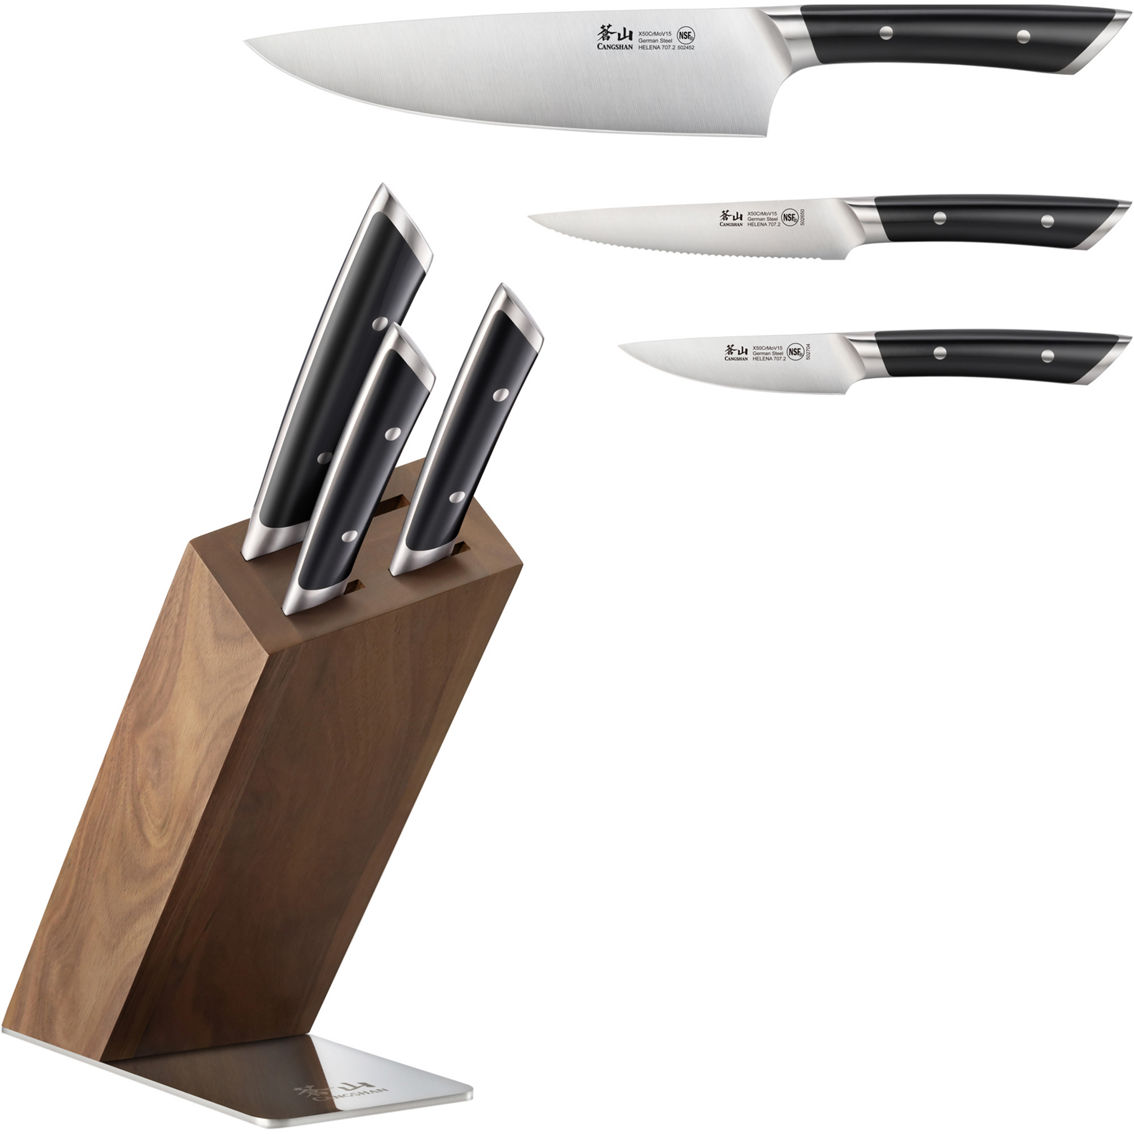 Nutri-Blade Cutlery Knife Set (Black Handle) - 6 pc. (Min Qty 1)